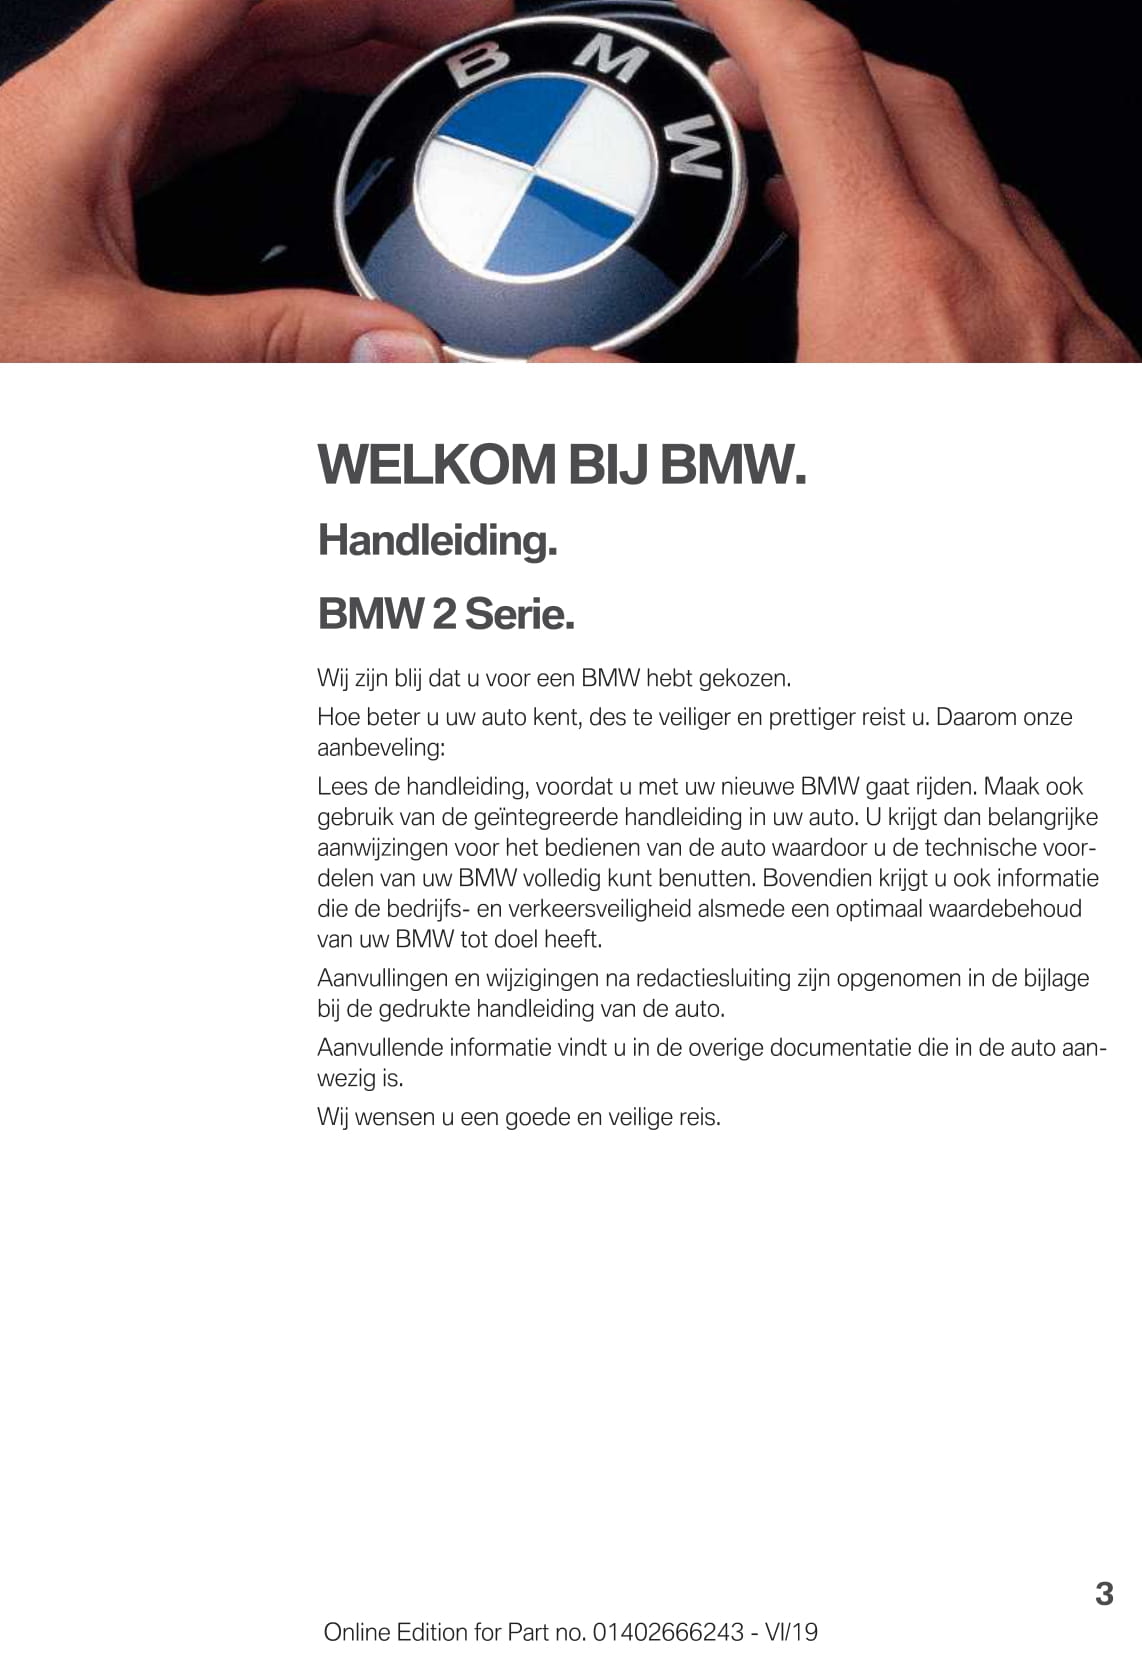 2019 BMW 2 Series Owner's Manual | Dutch